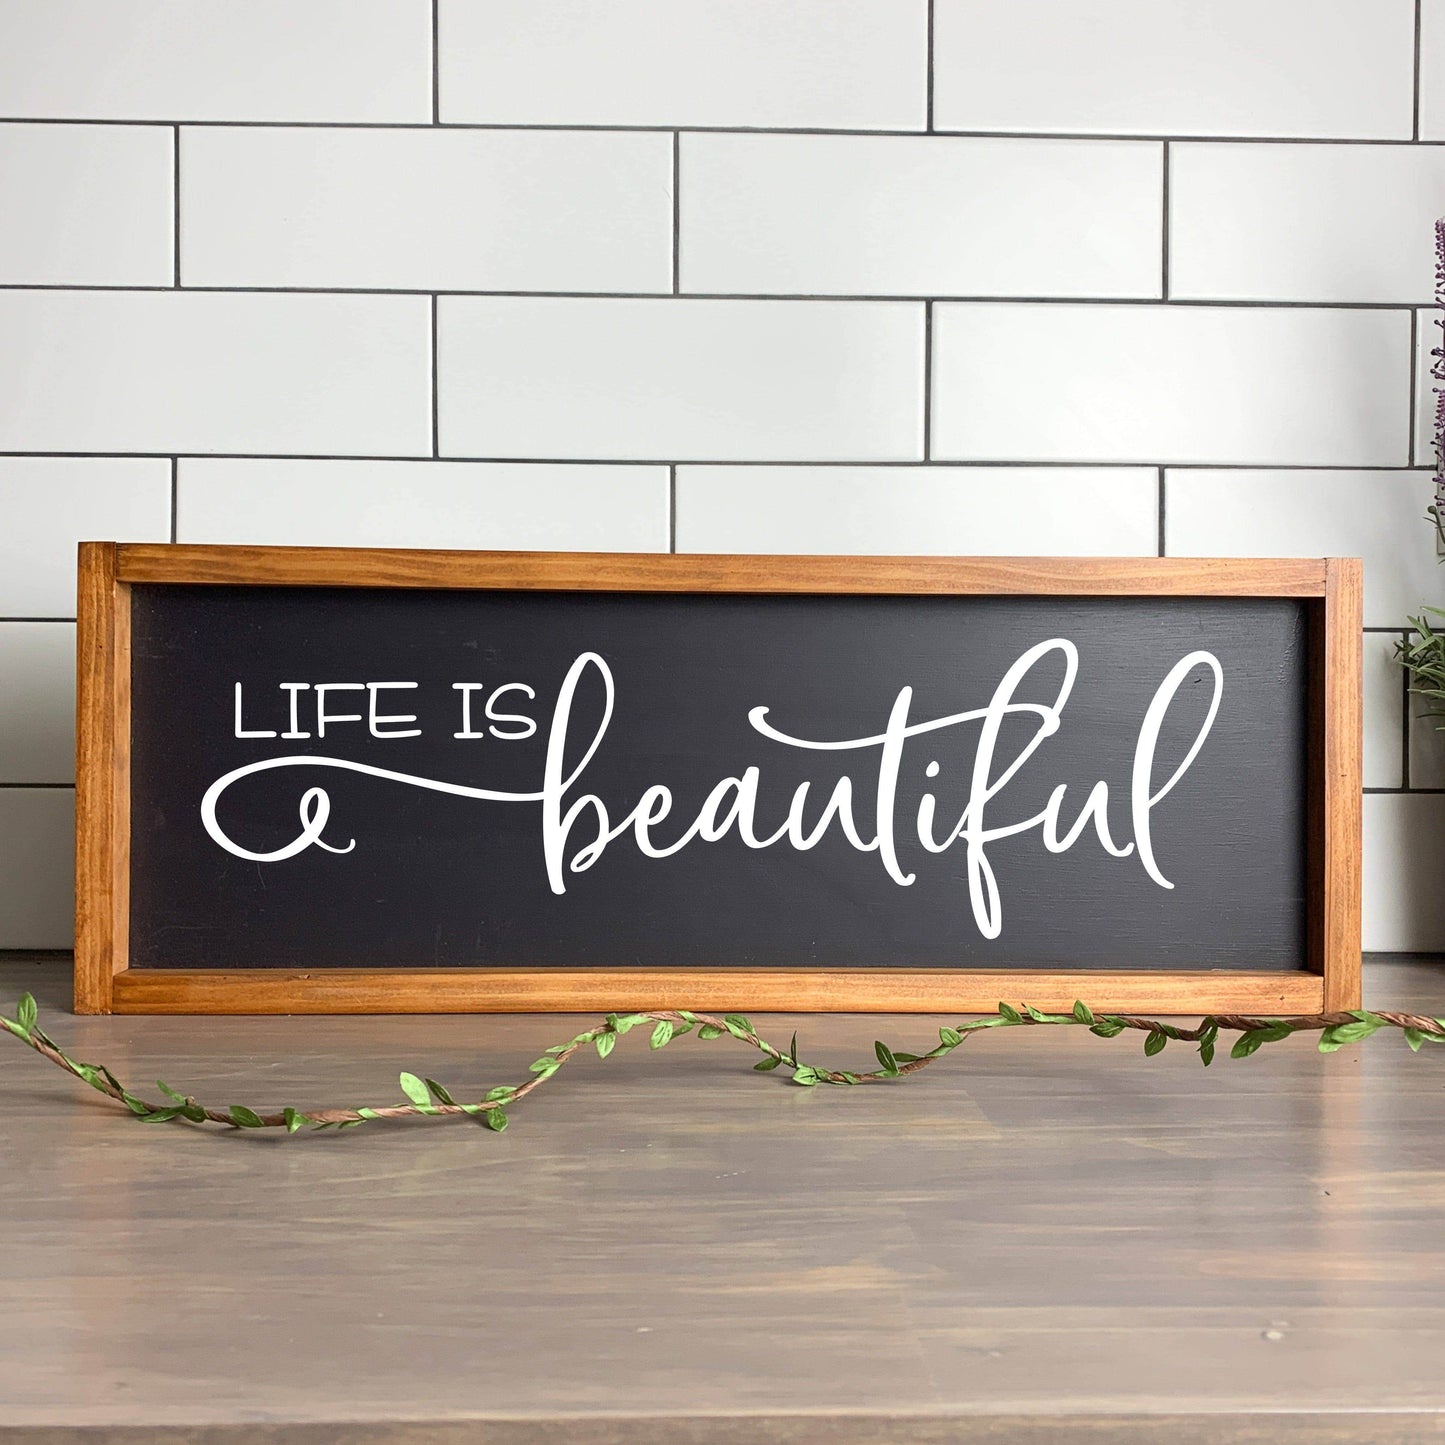 Life is Beautiful framed wood sign, farmhouse sign, rustic decor, home decor -